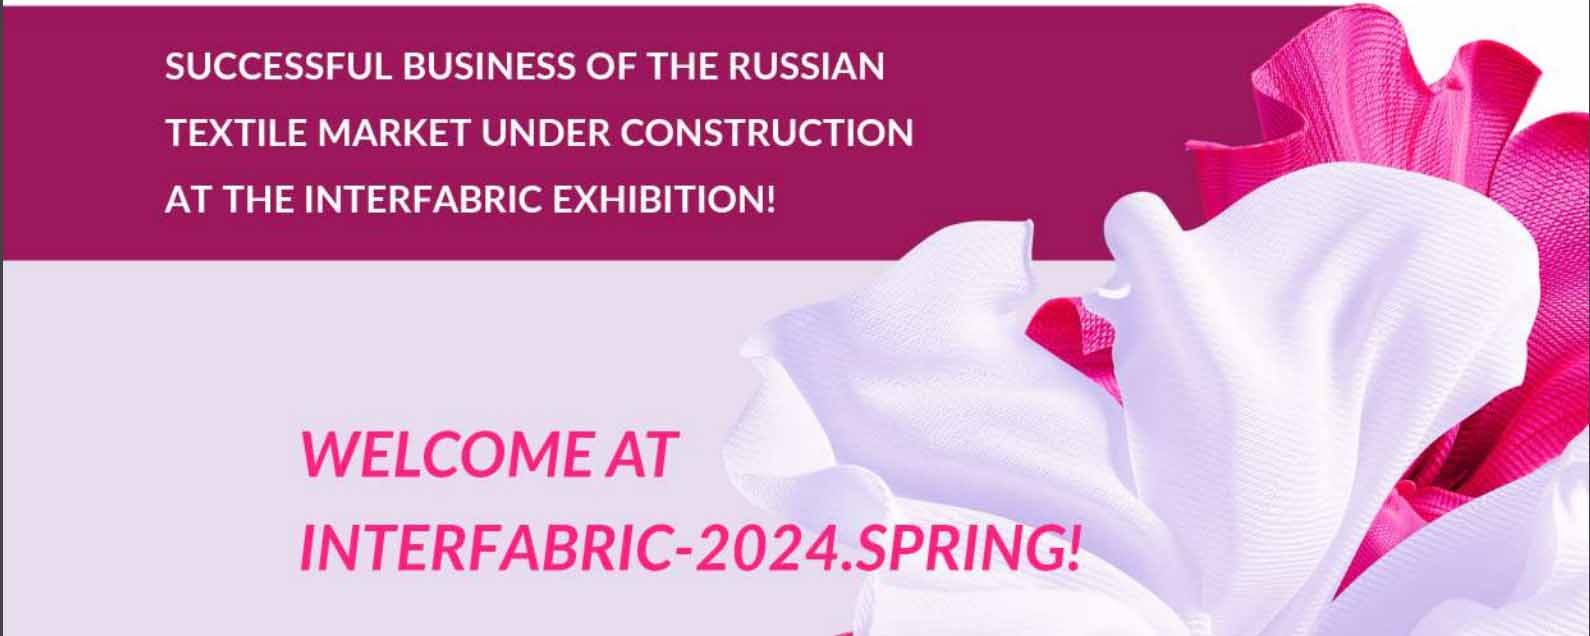 fabric exhibition 2024